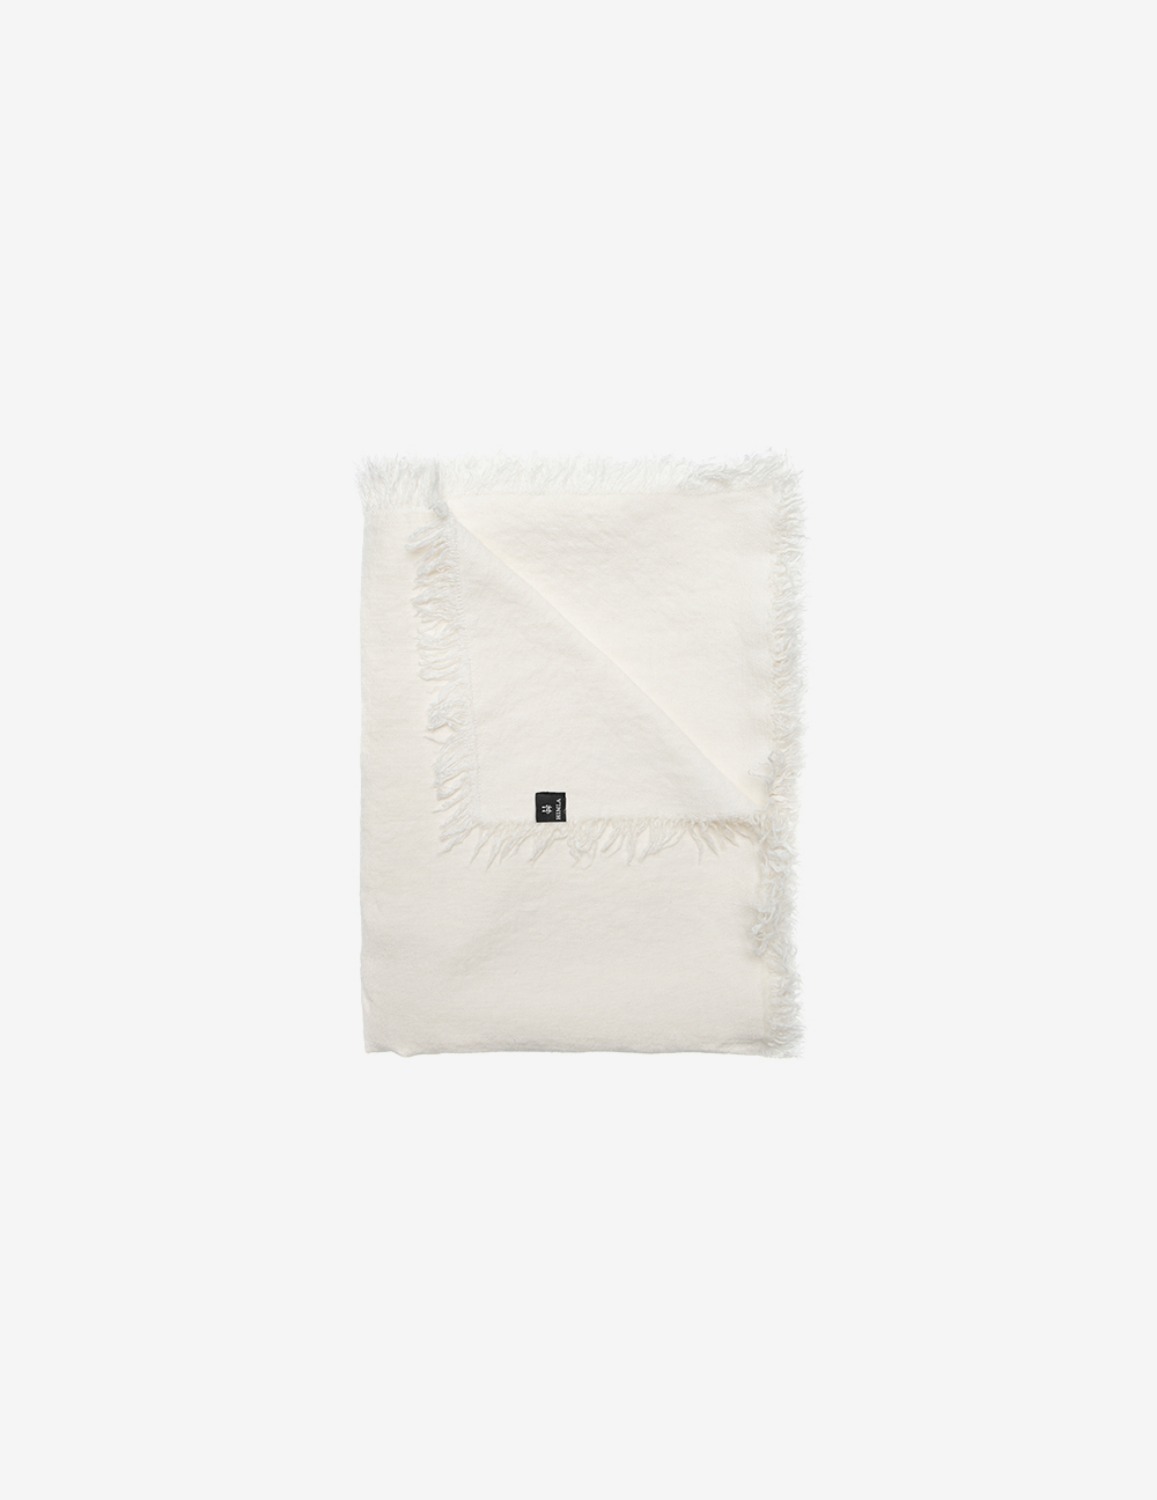 [HIMLA] Merlin Throw / Off white (130x170)